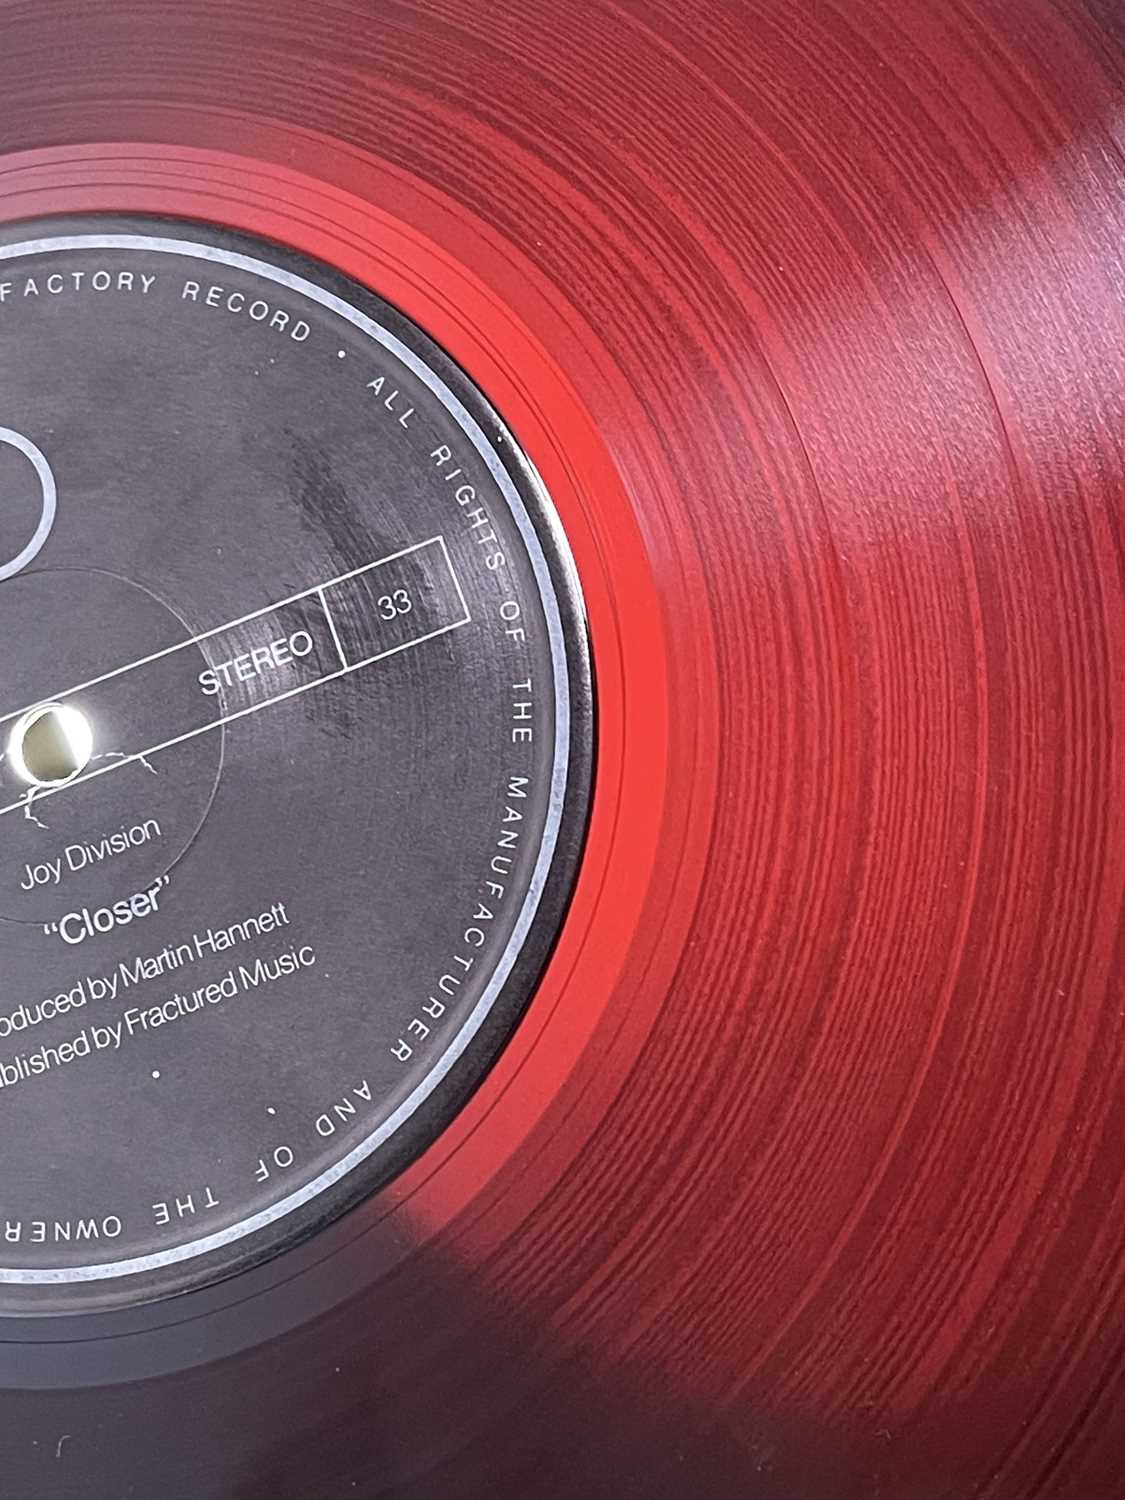 JOY DIVISION - CLOSER LP (UK ORIGINAL - RED TRANSLUCENT - FACTORY - FACT 25) - Image 6 of 6